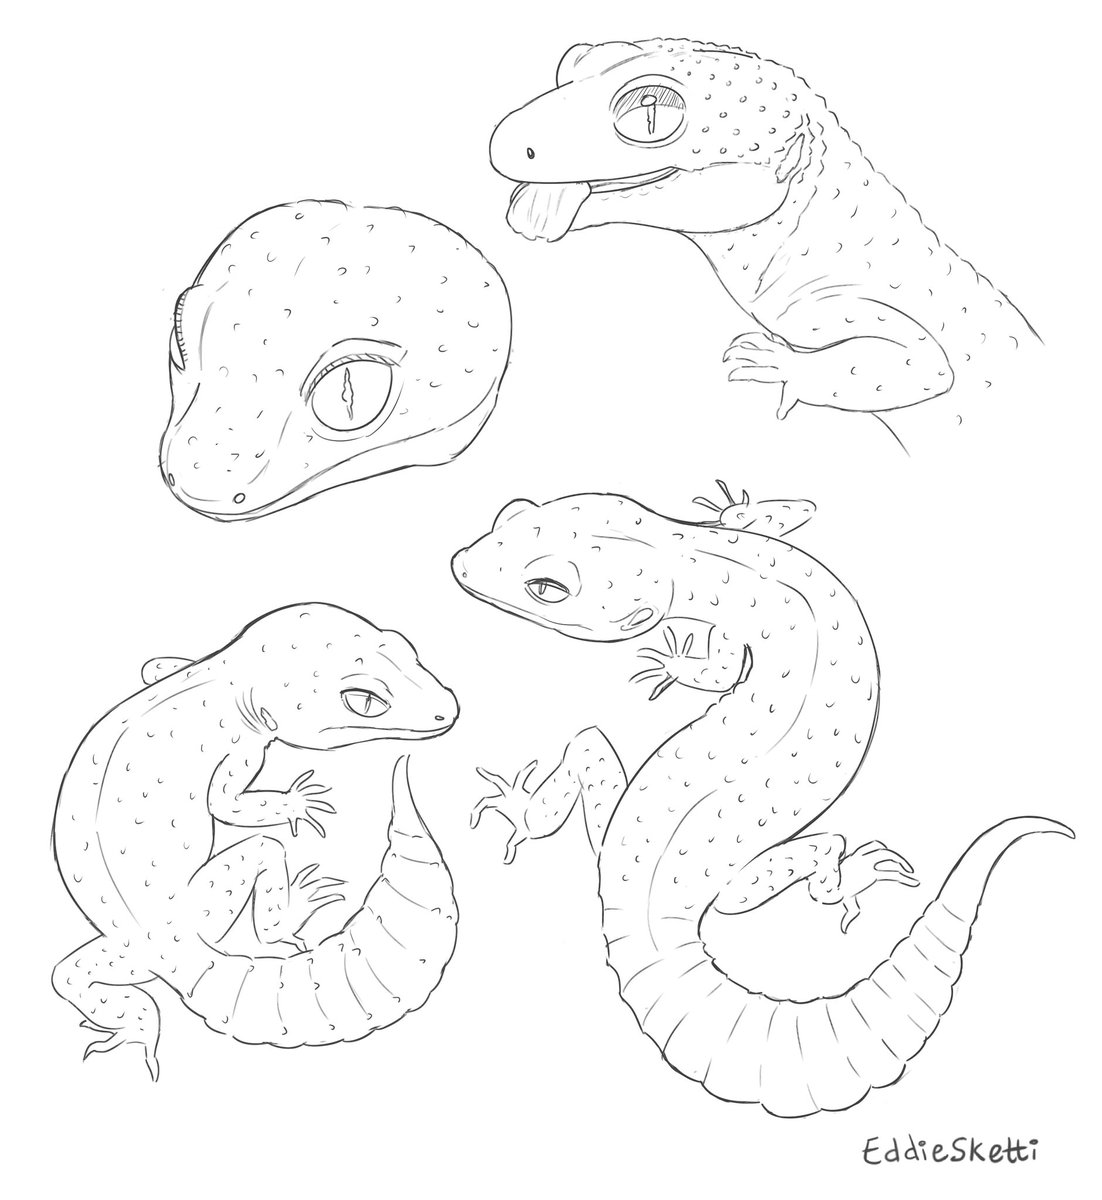 Leo sketches
#leopardgecko #reptiles 